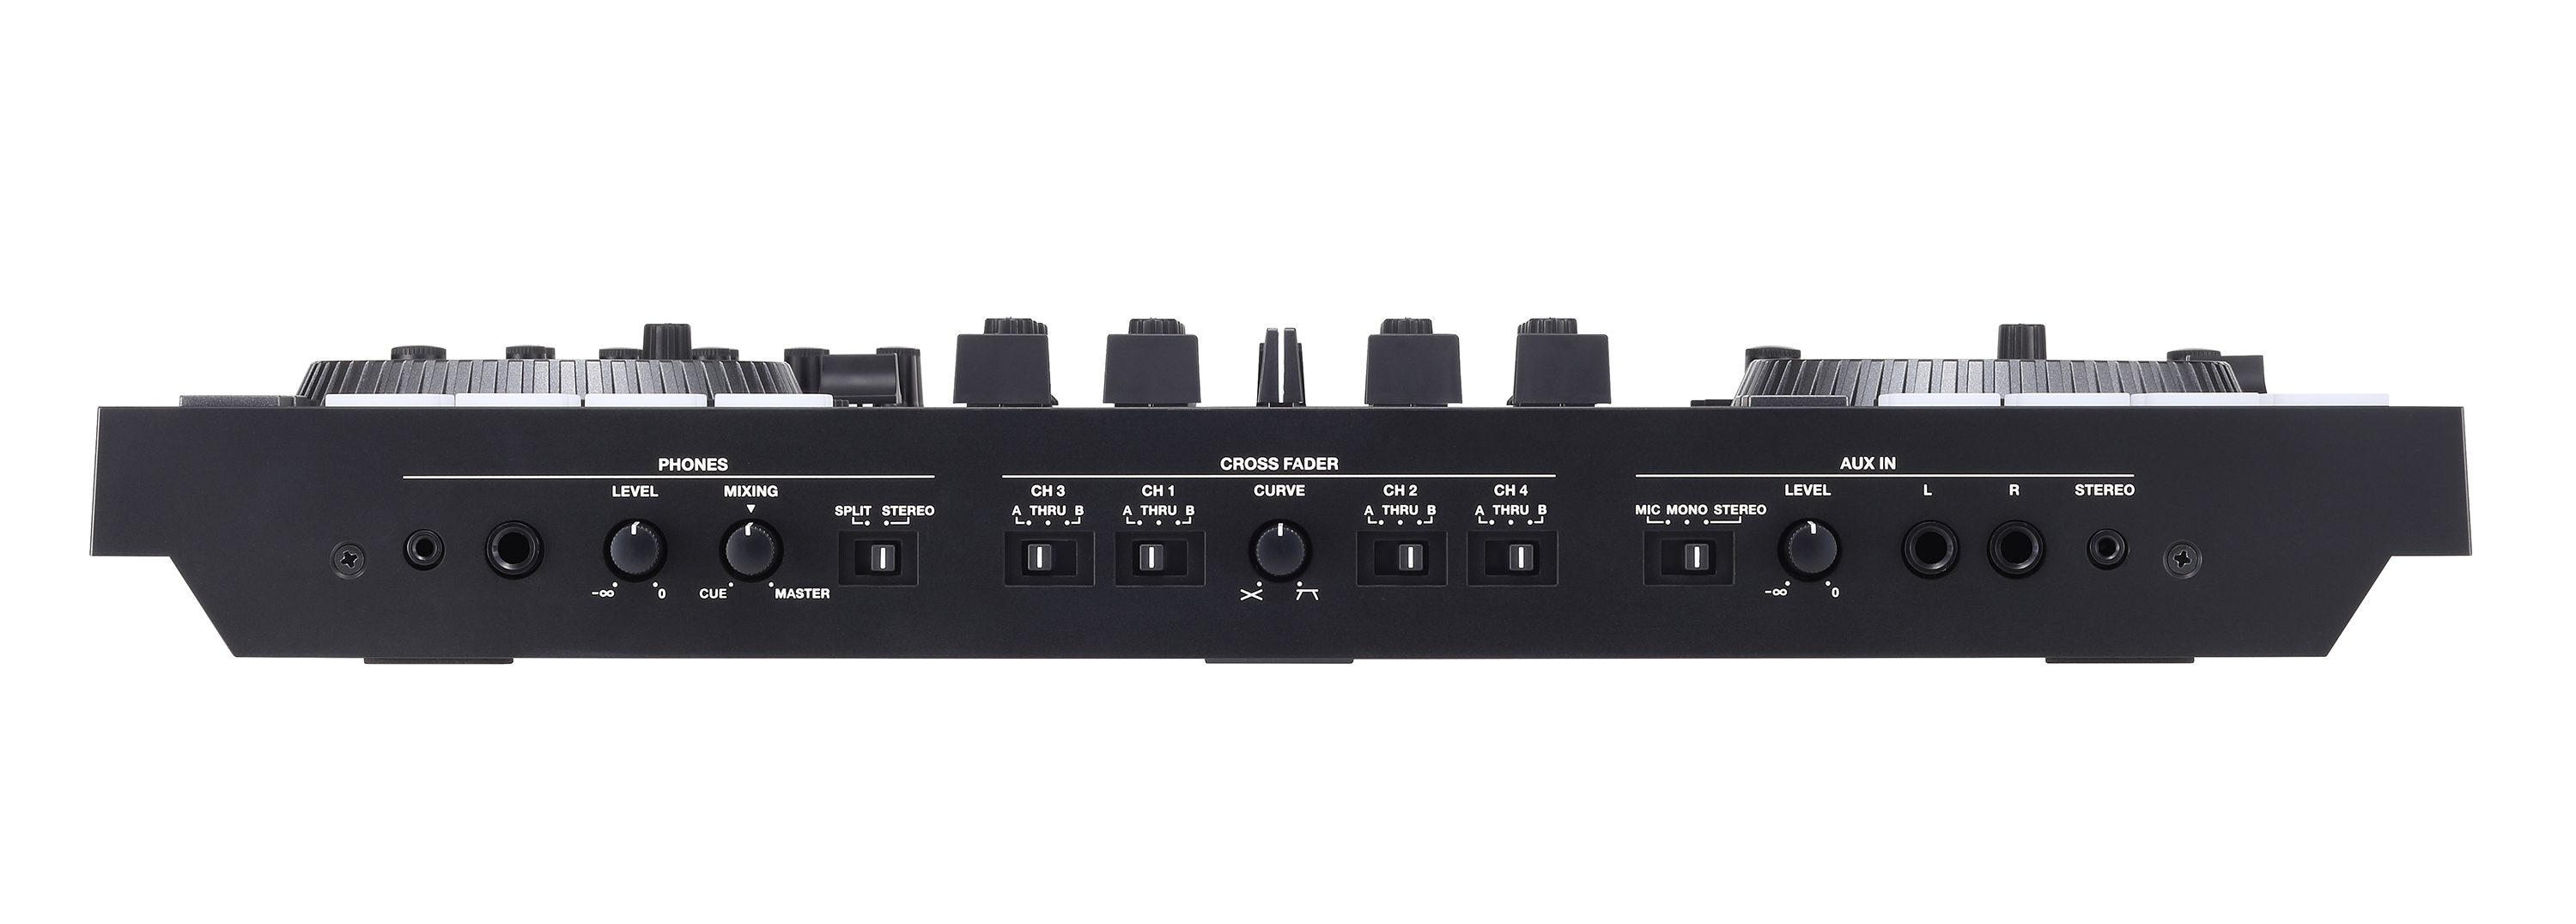 Roland Dj-707m - Controlador DJ USB - Variation 2